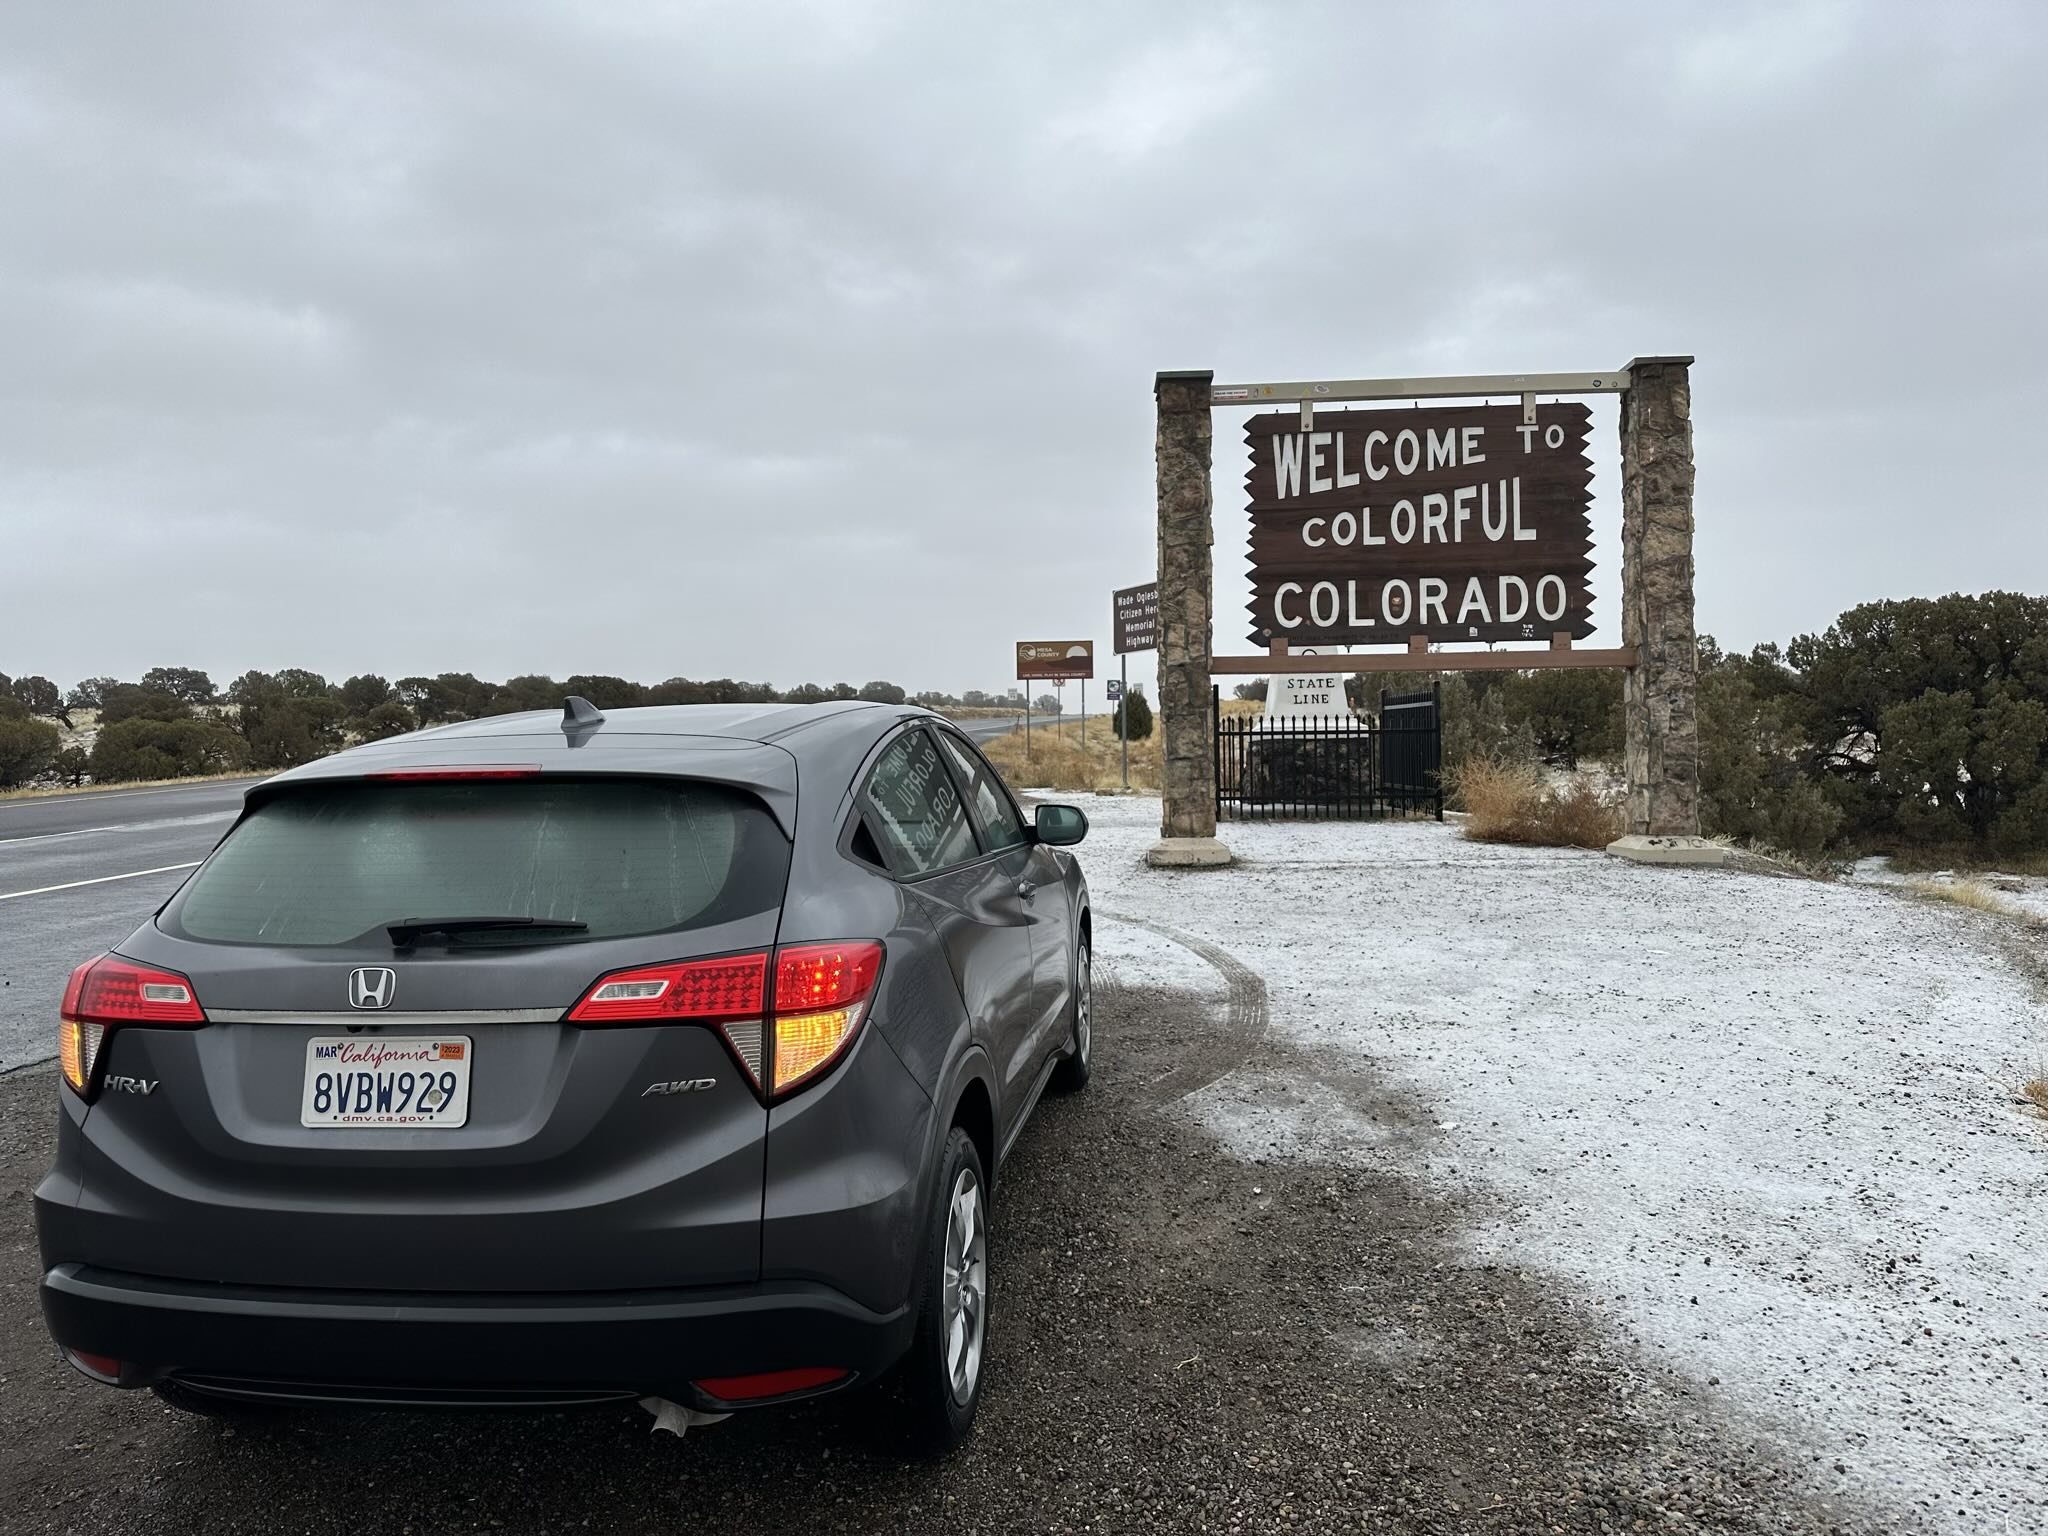 The Honda HR-V rental car at the Colorado border.